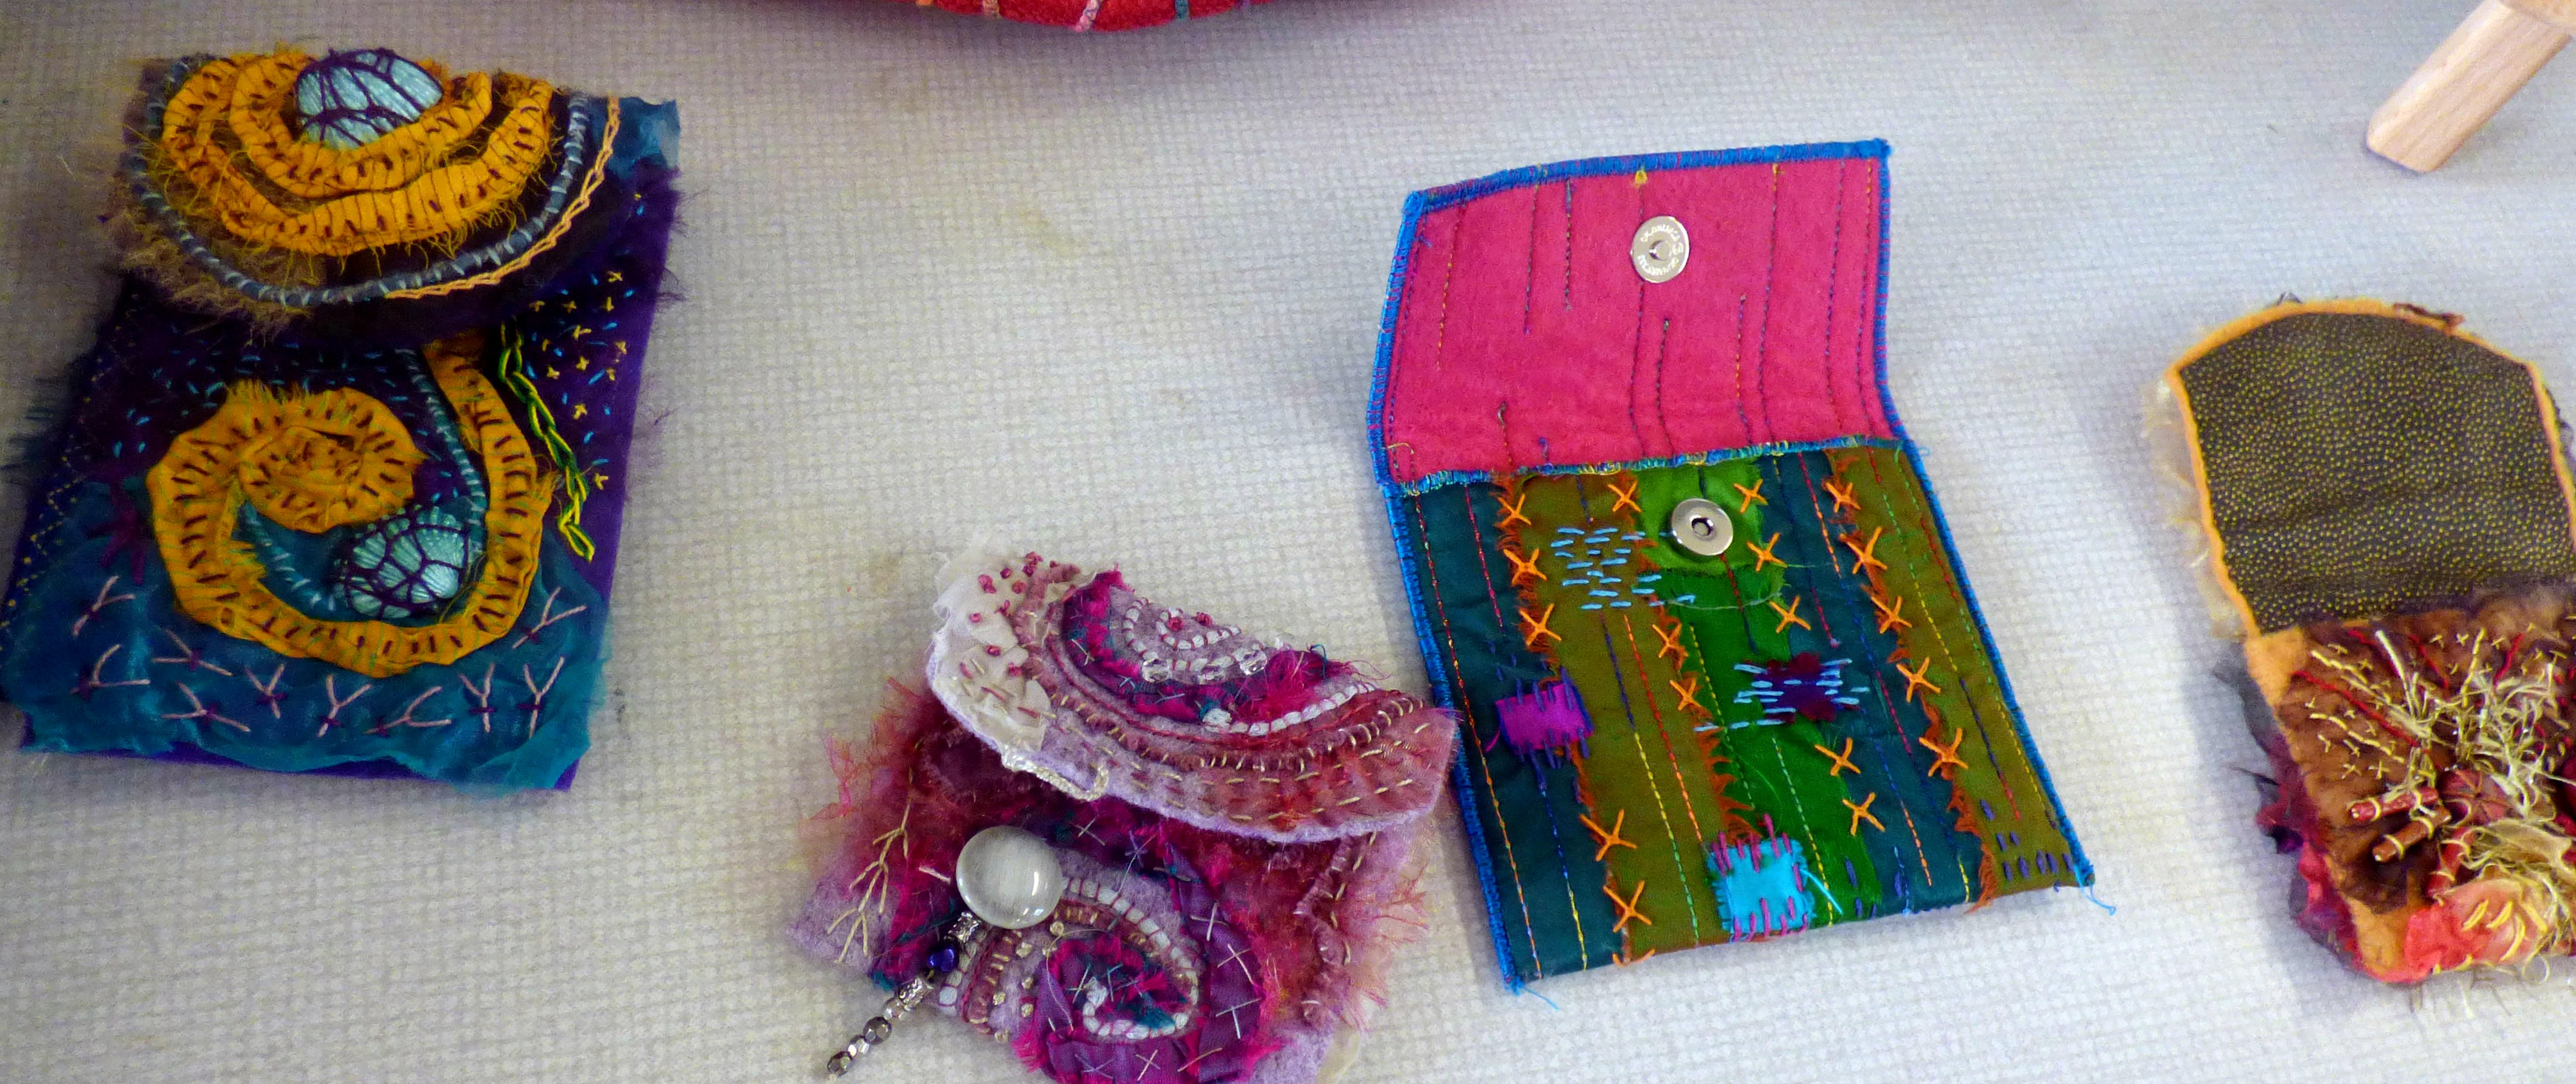 samples by Diane Moore at "Creating with Sari Silk" workshop with Diane Moore, Feb 2023